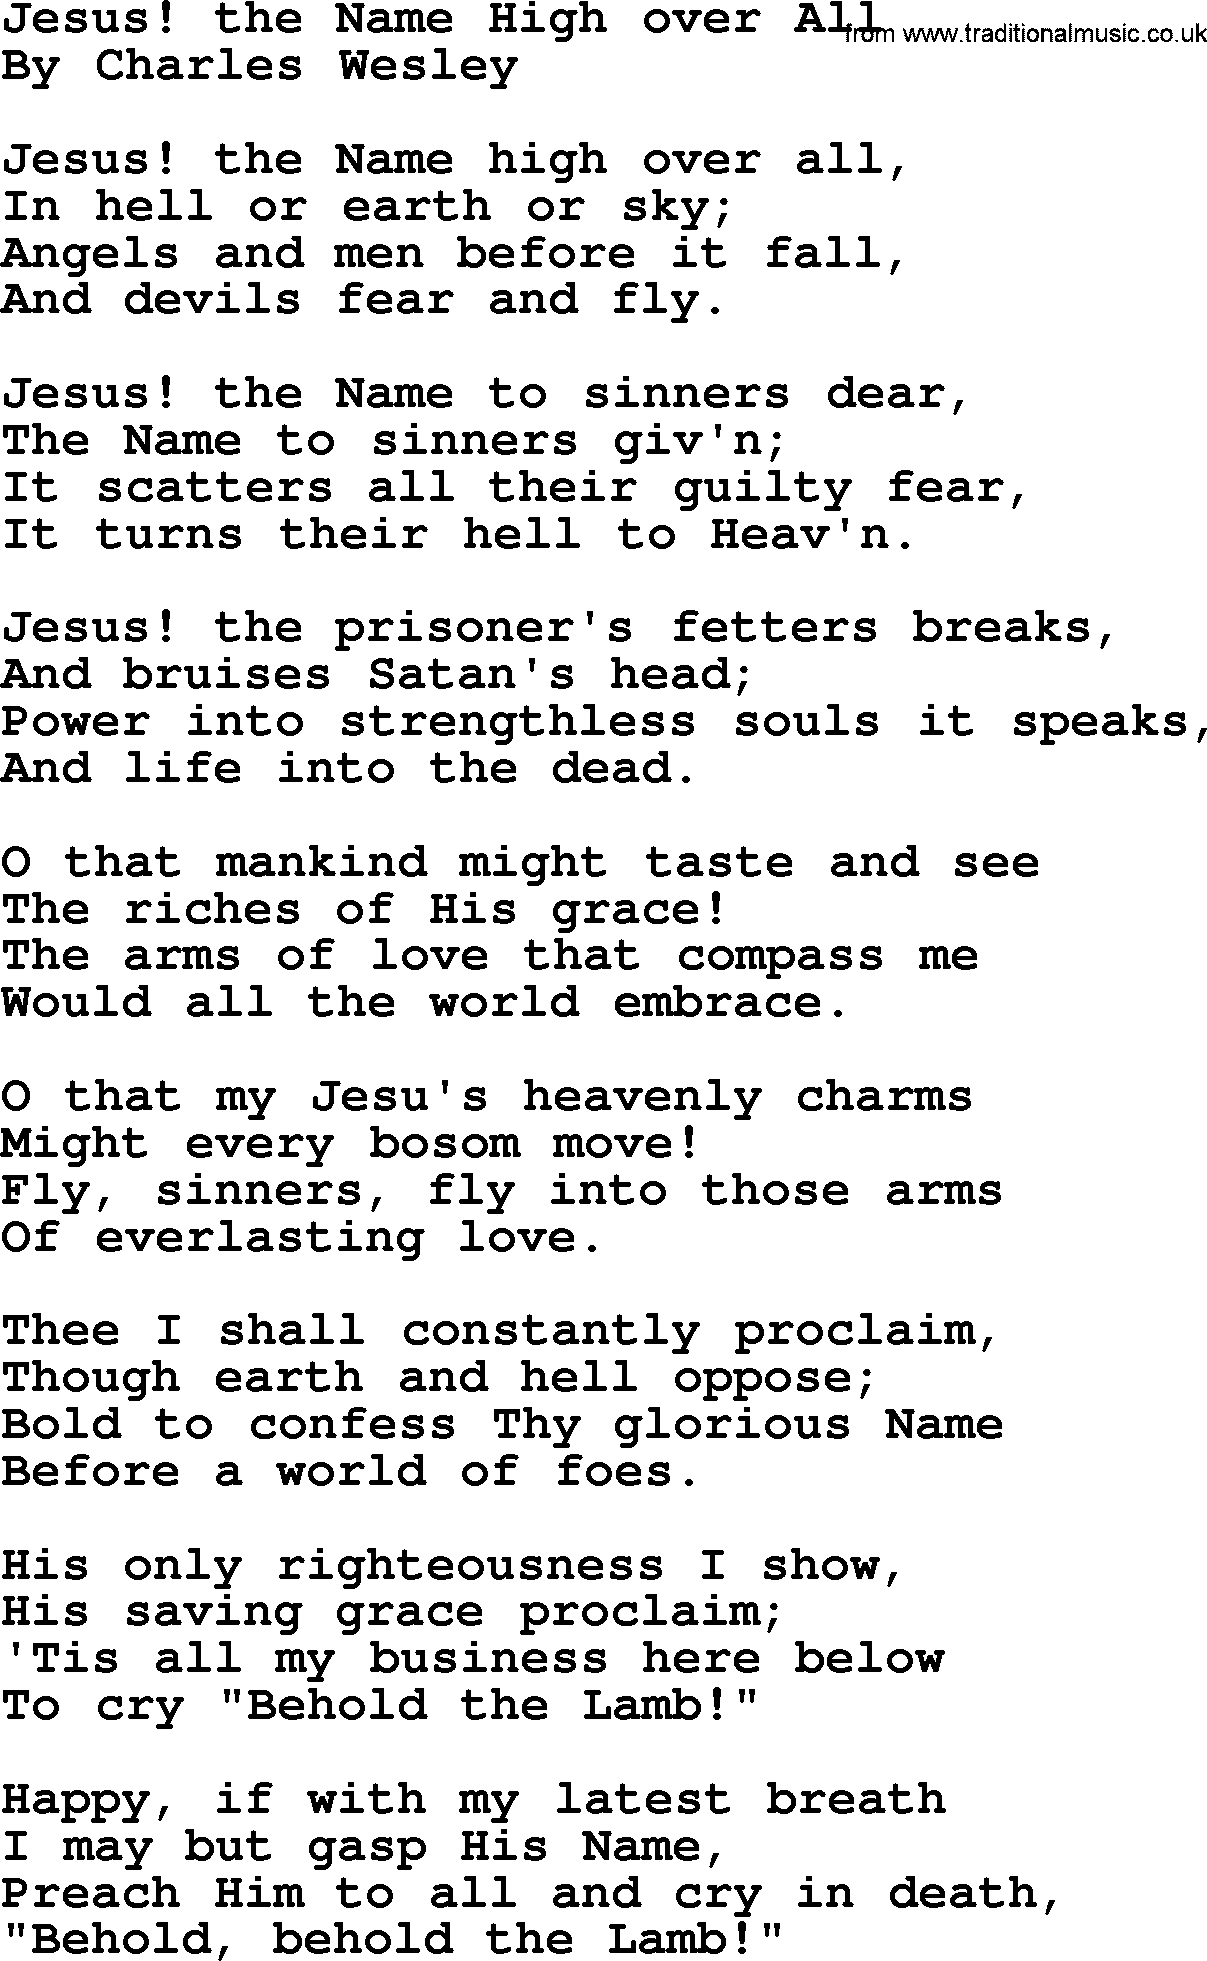 Charles Wesley hymn: Jesus! the Name High over All, lyrics